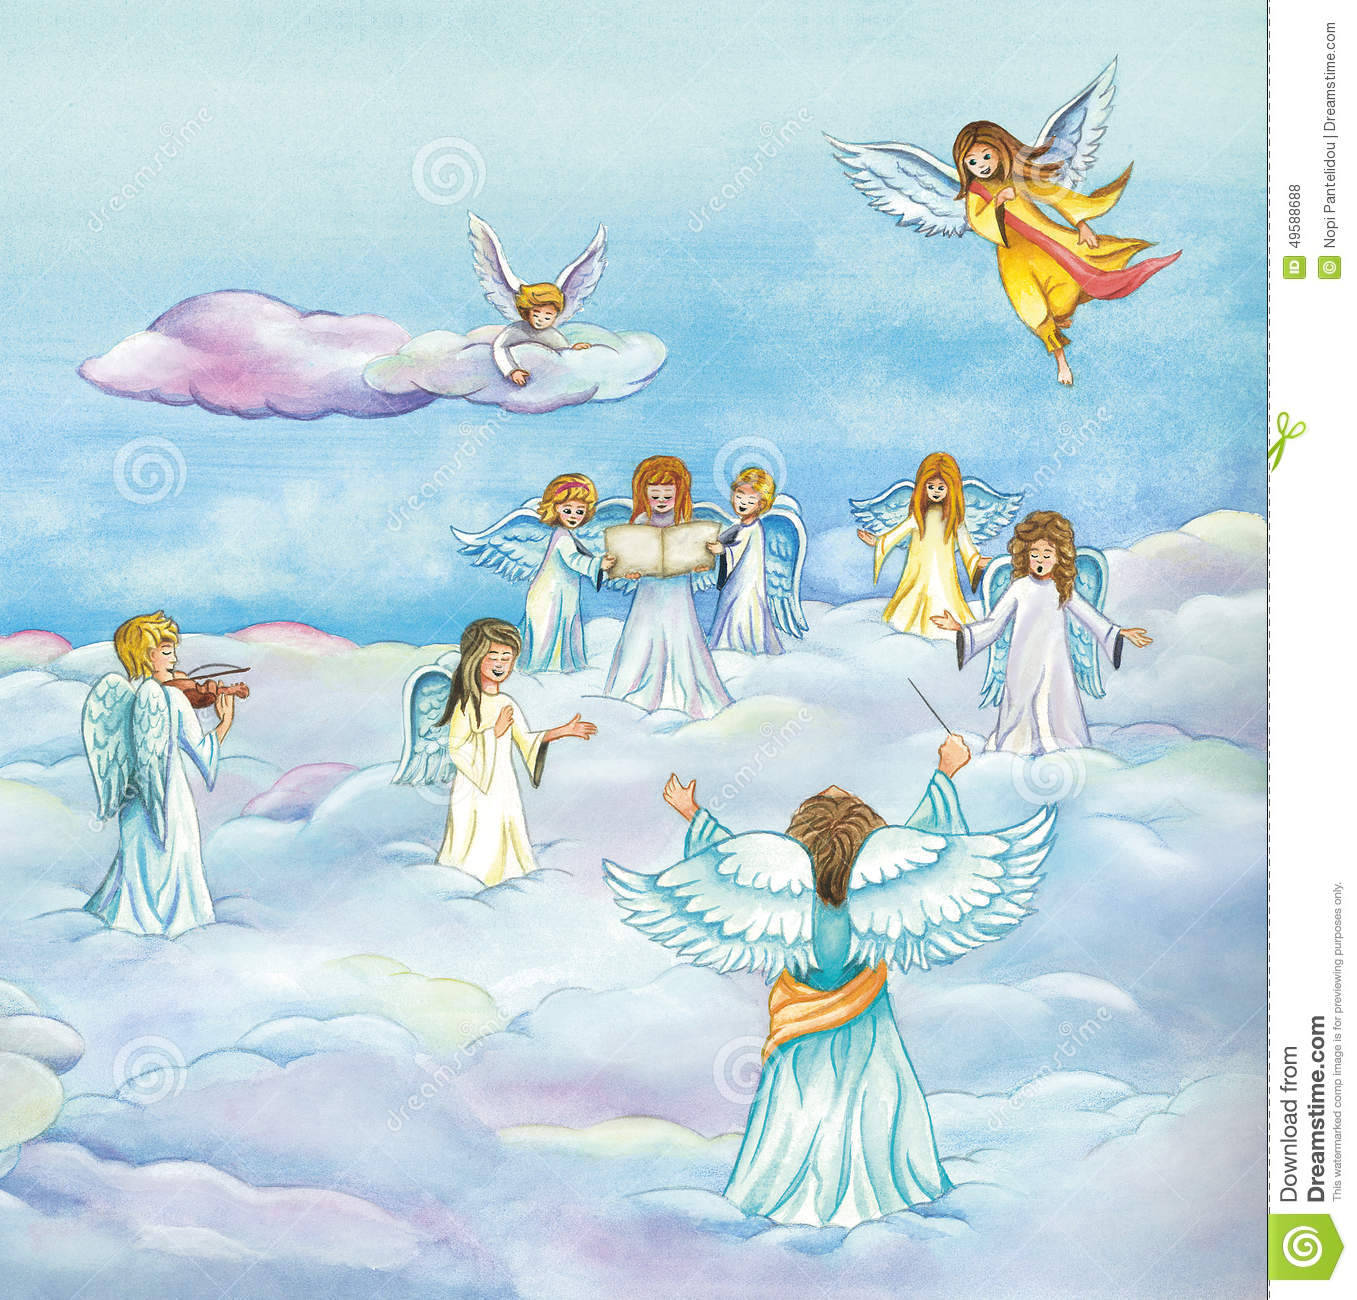 "Glimpse of Heavenly Angels" Wallpaper